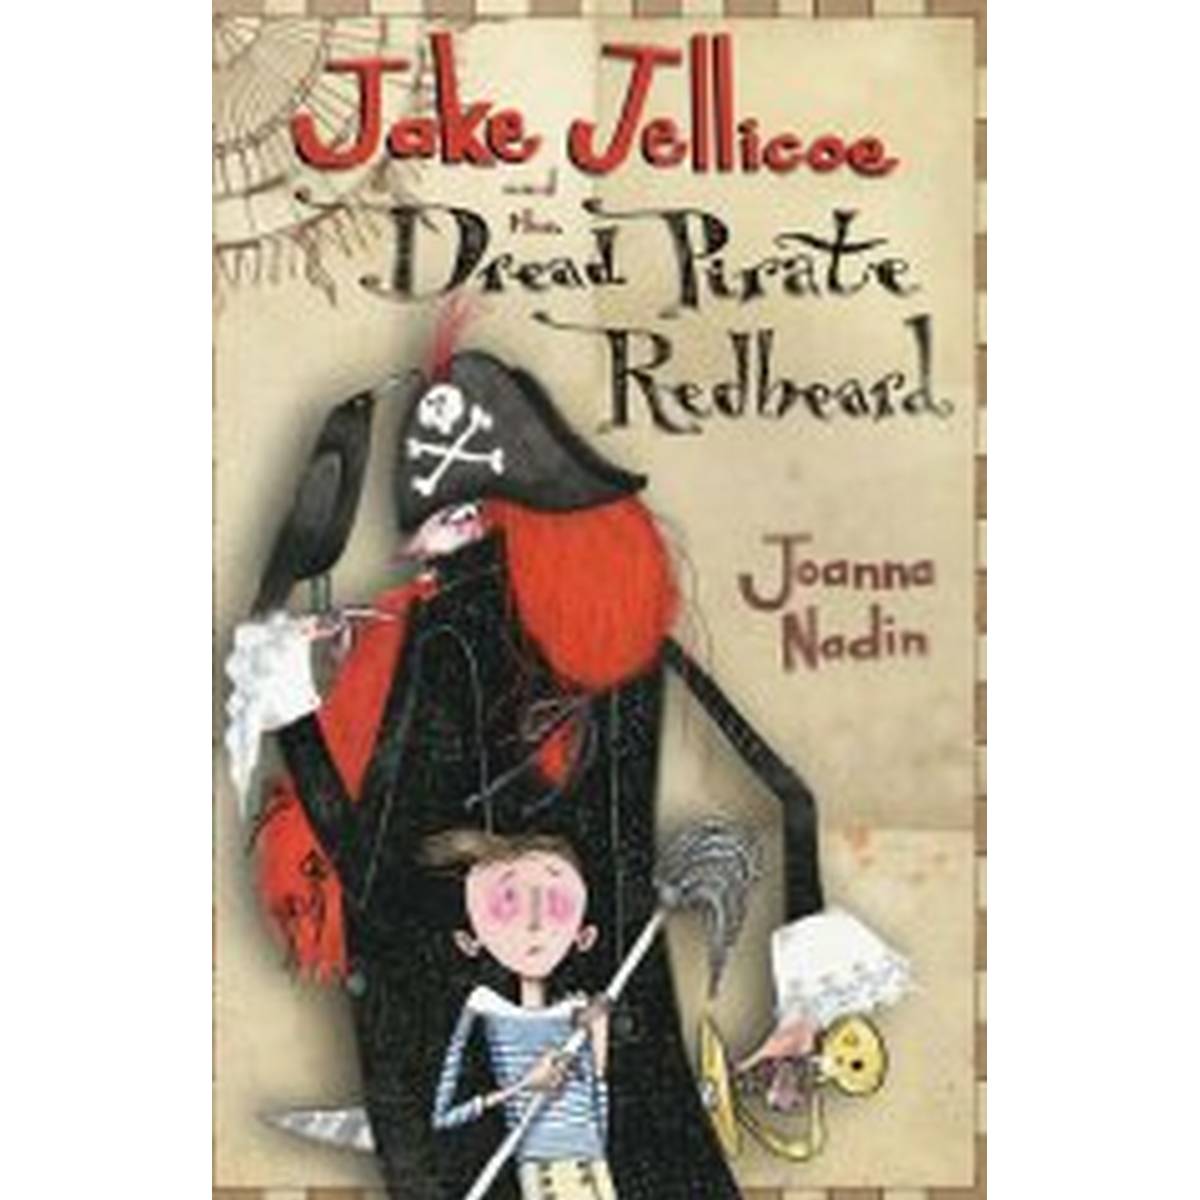 Jake Jellicoe and the Dread Pirate Redbeard